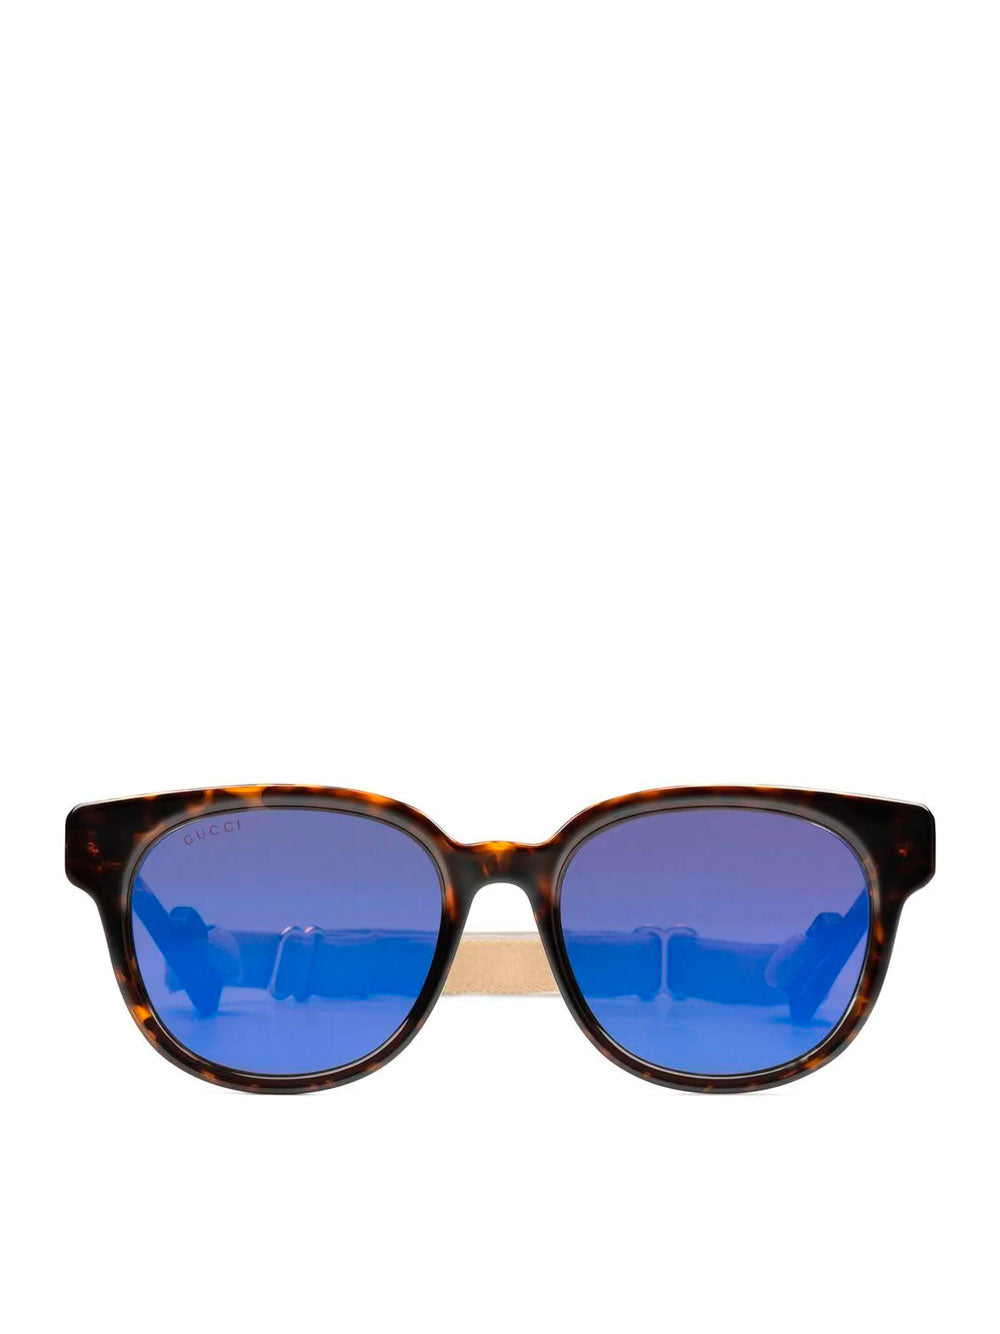 Wayfarer-frame sunglasses